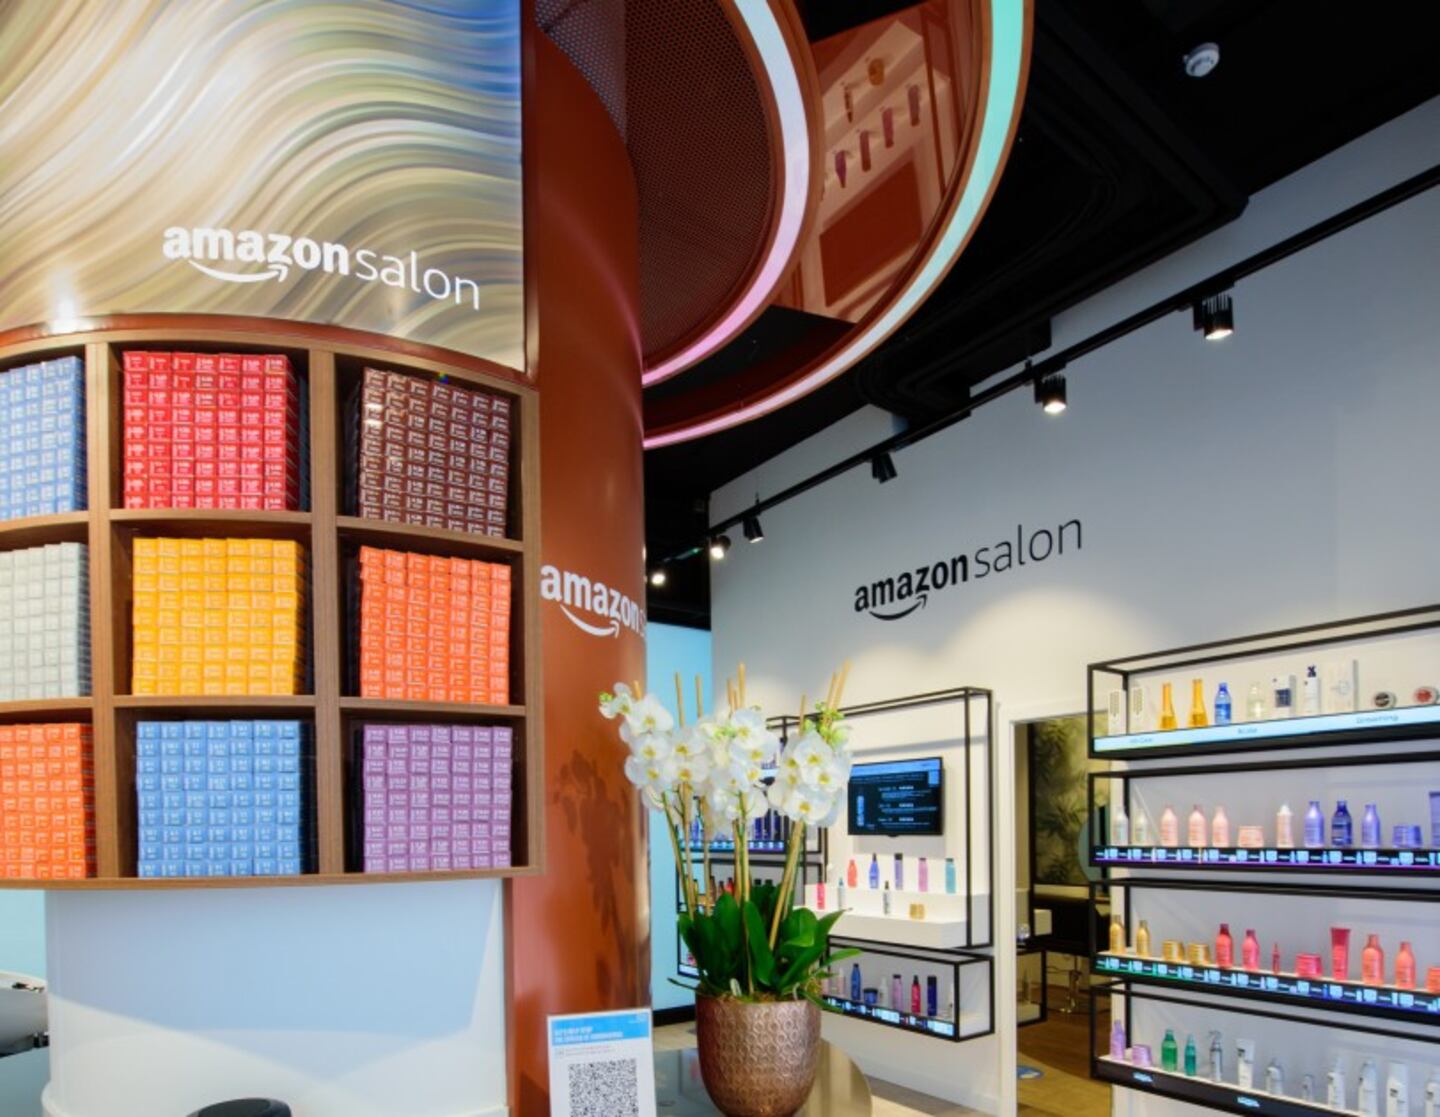 Amazon Salon in London. Amazon